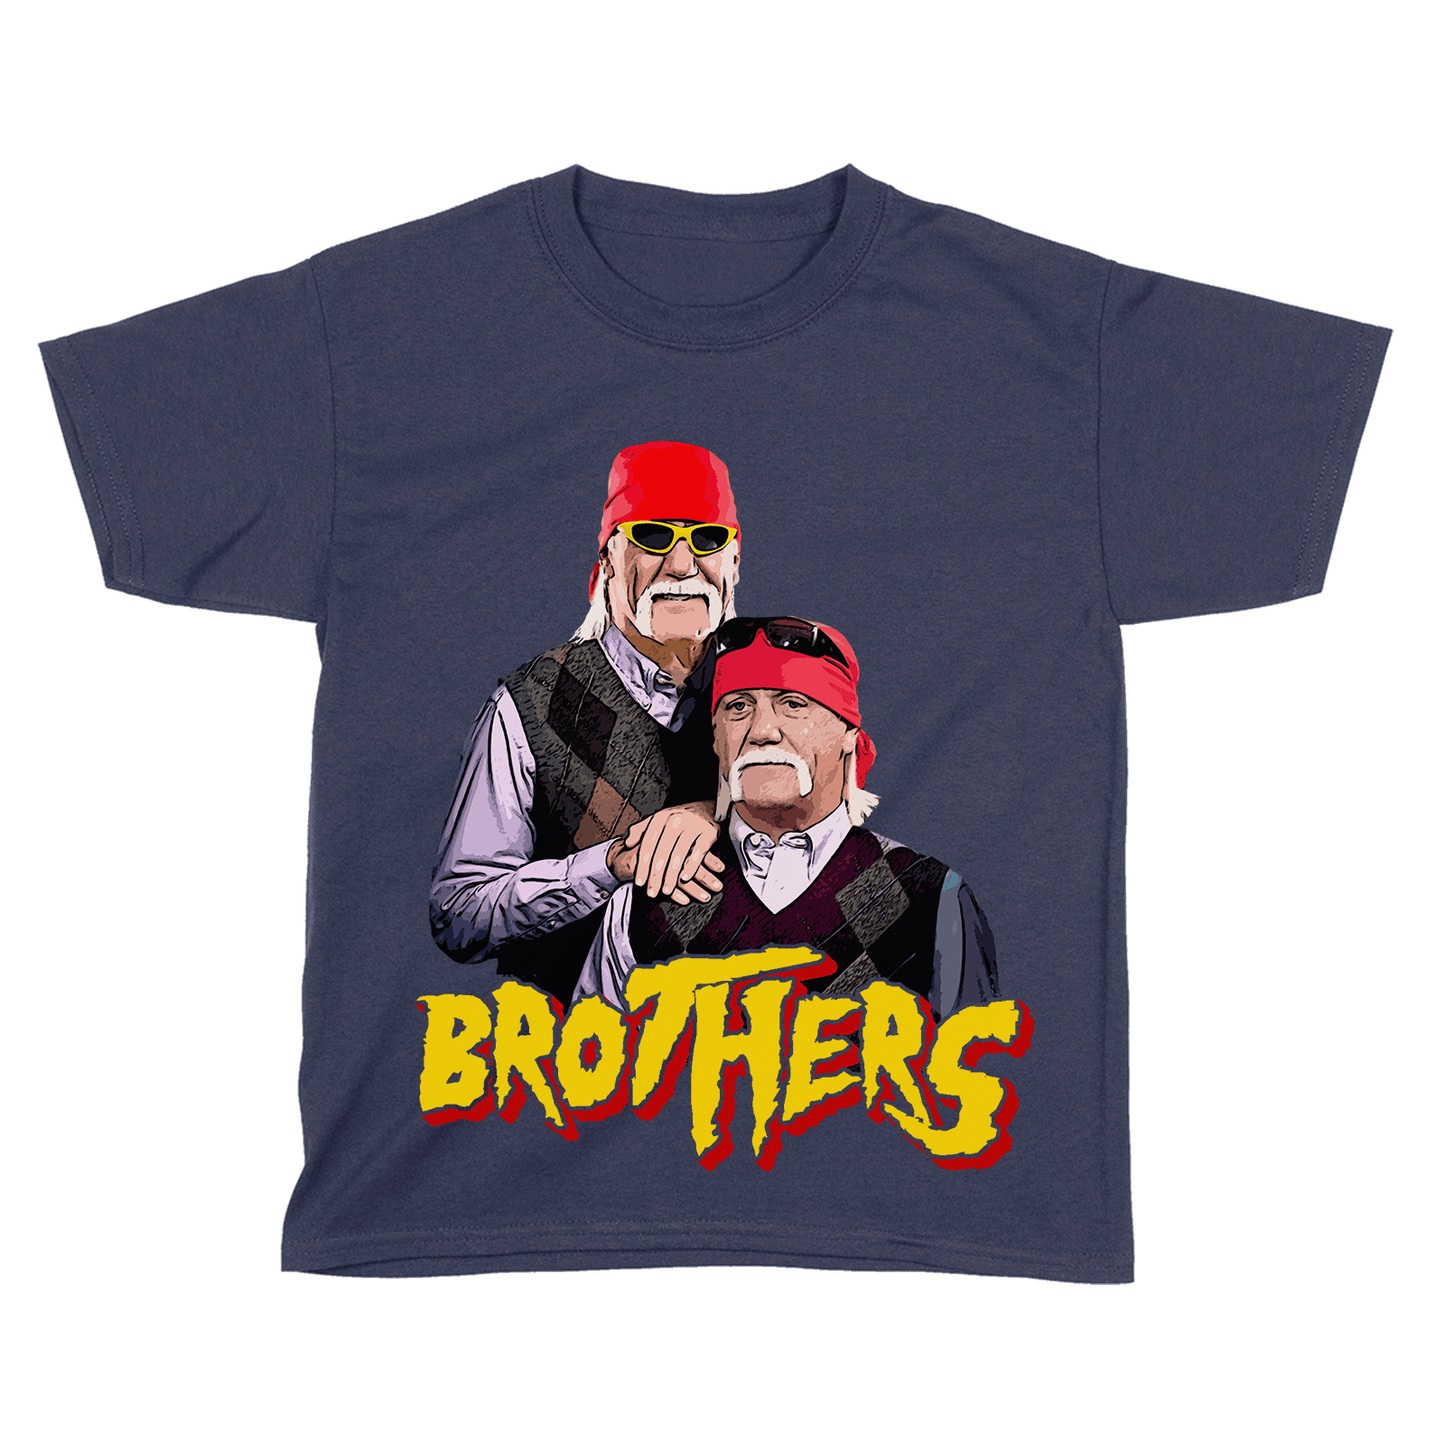 Brothers - Kids